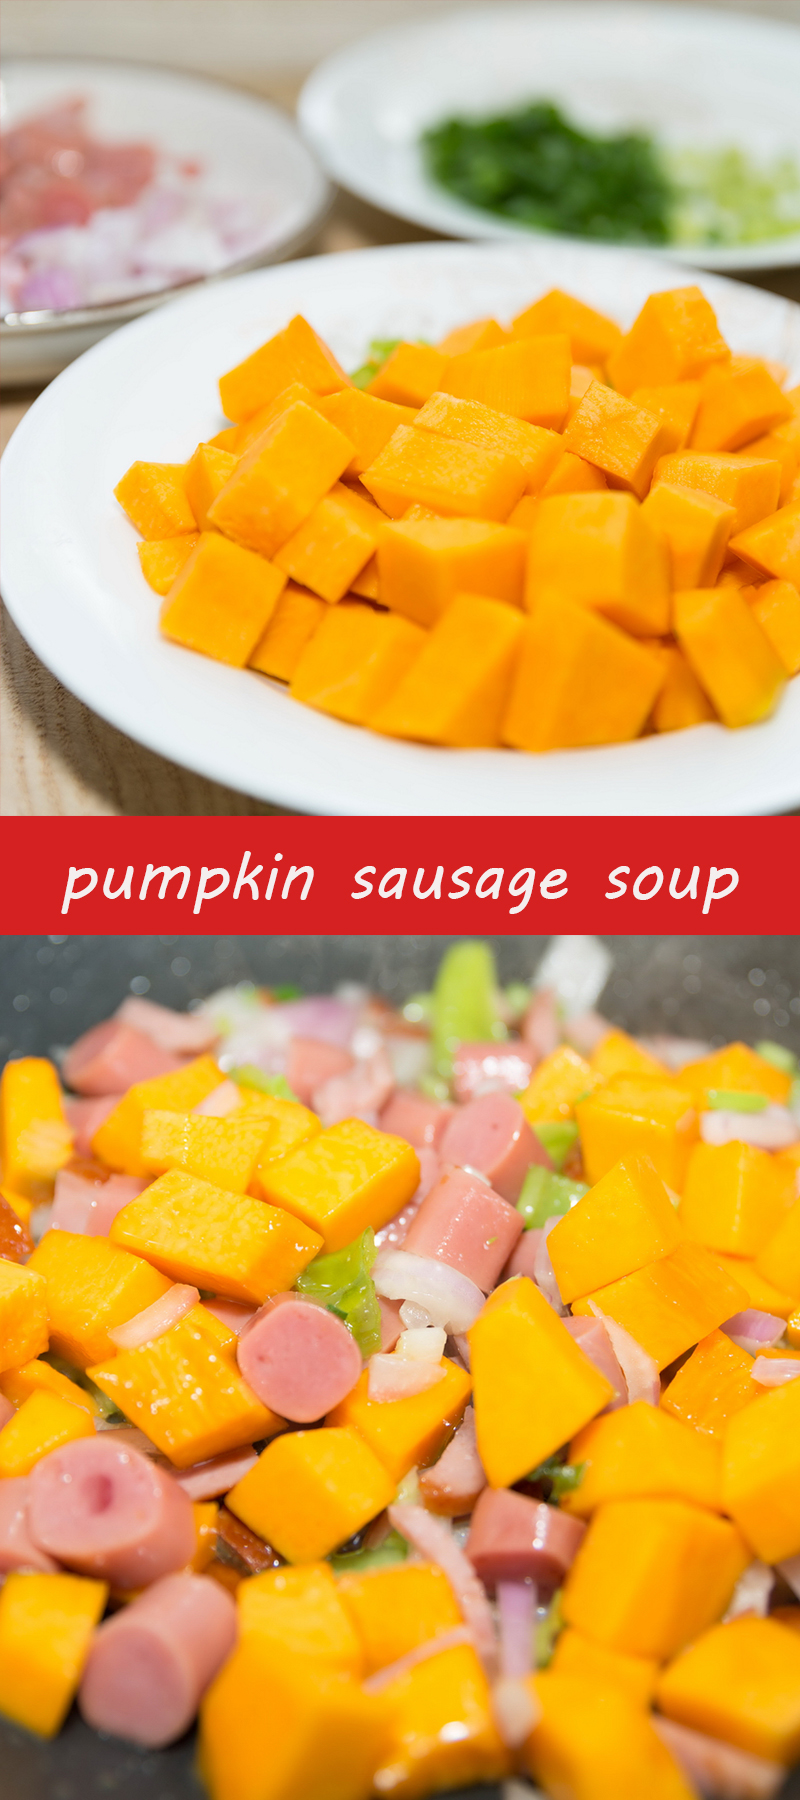 pumpkin sausage soup